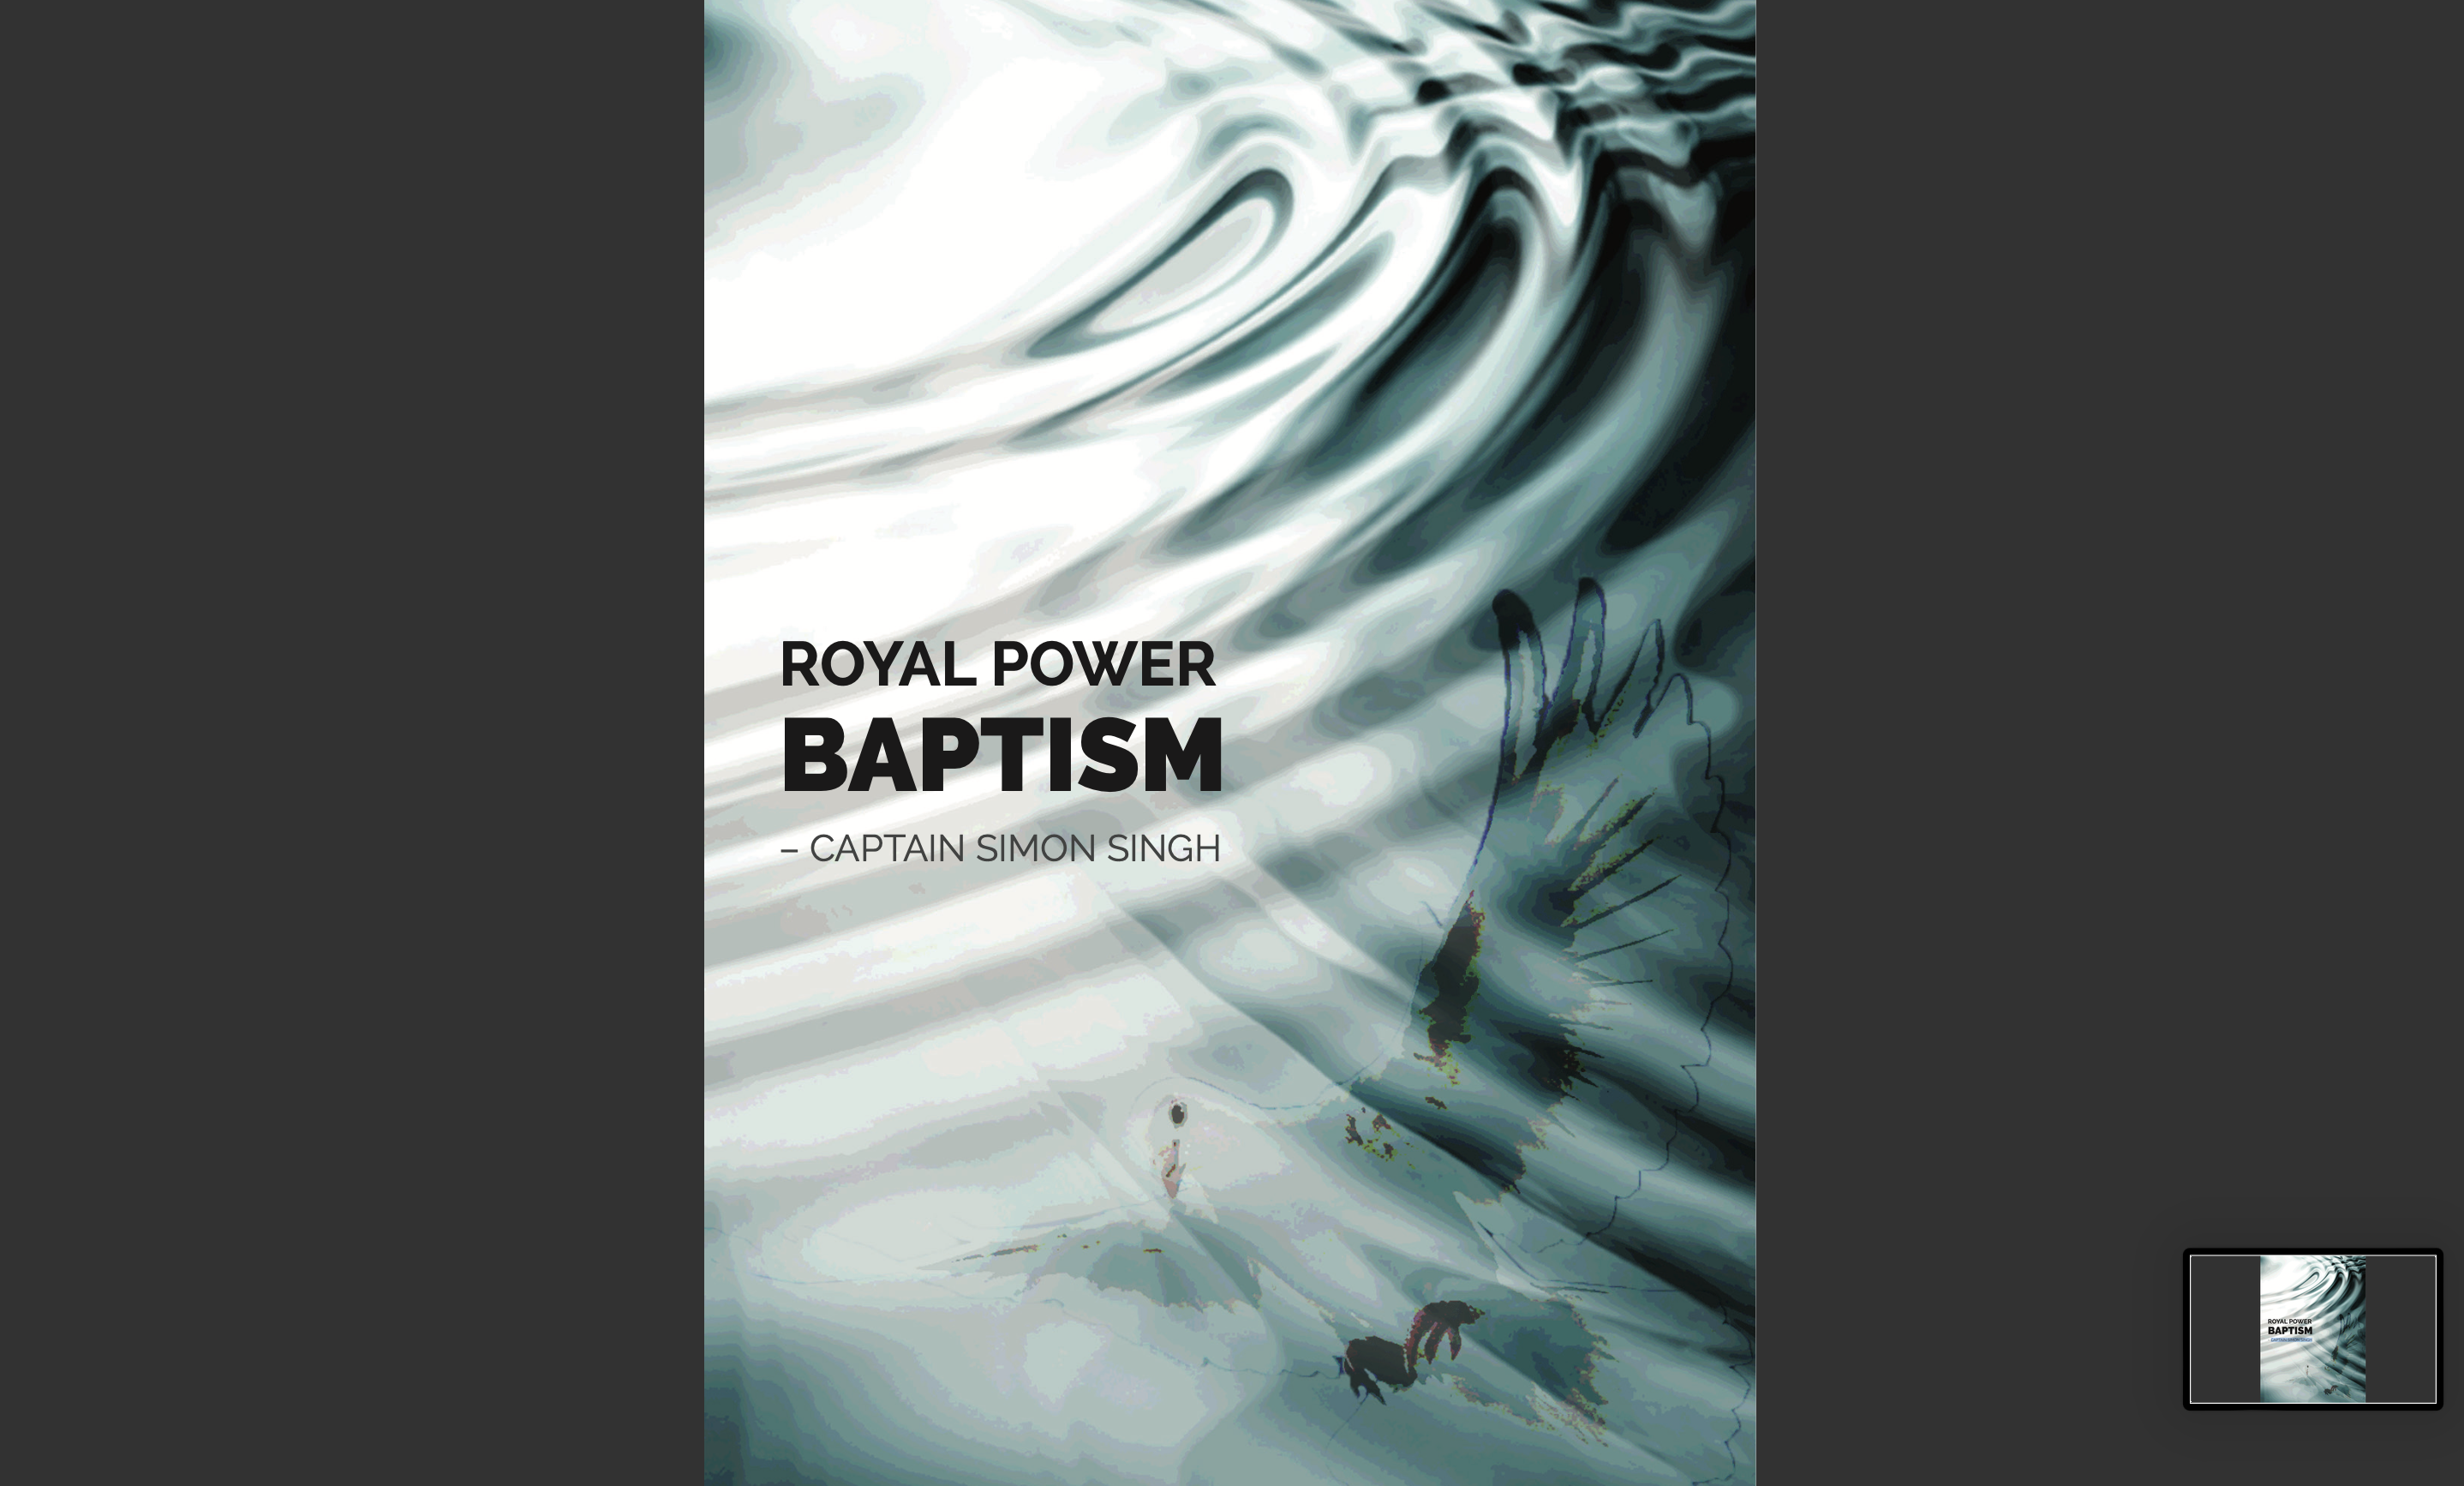 ROYAL POWER BAPTISM